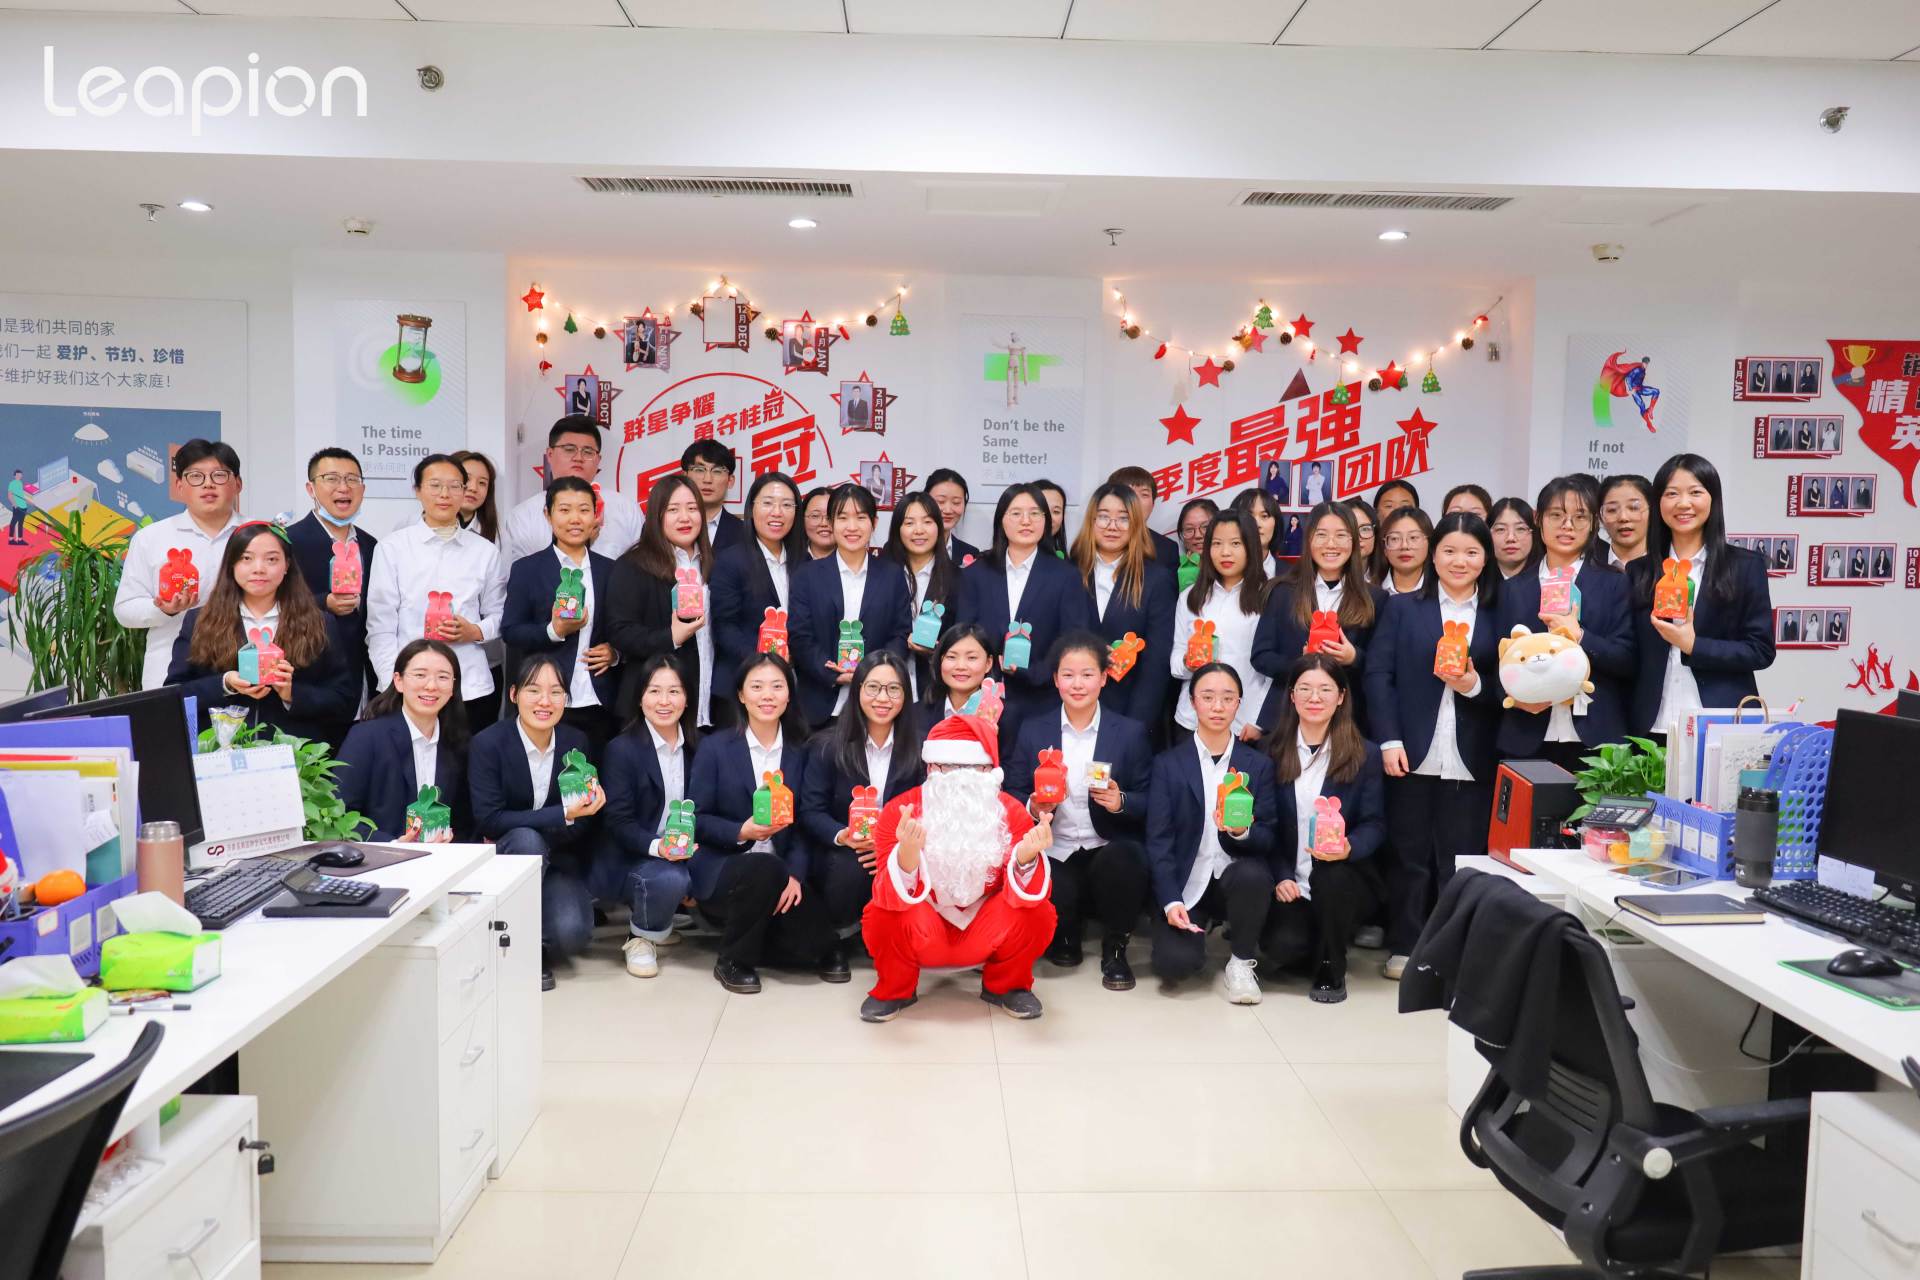 يحتفل موظفو Leapion بعيد الميلاد عام 2021